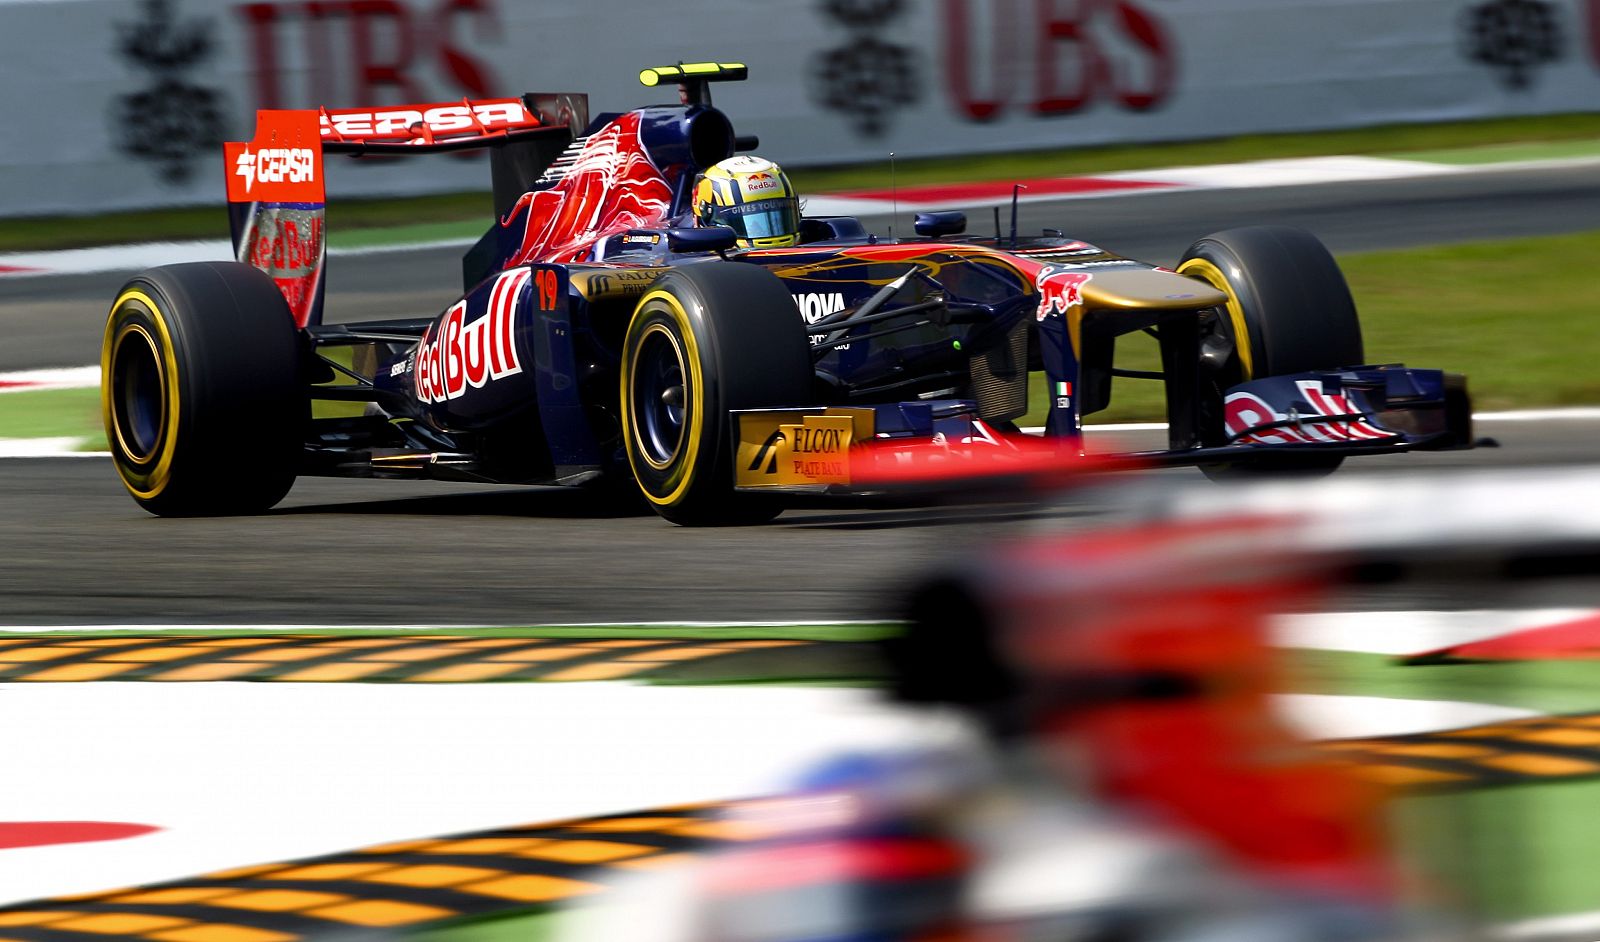 El piloto español Jaime Alguersuari (Toro Rosso), conduce su monoplaza durante el Gran Premio de Italia